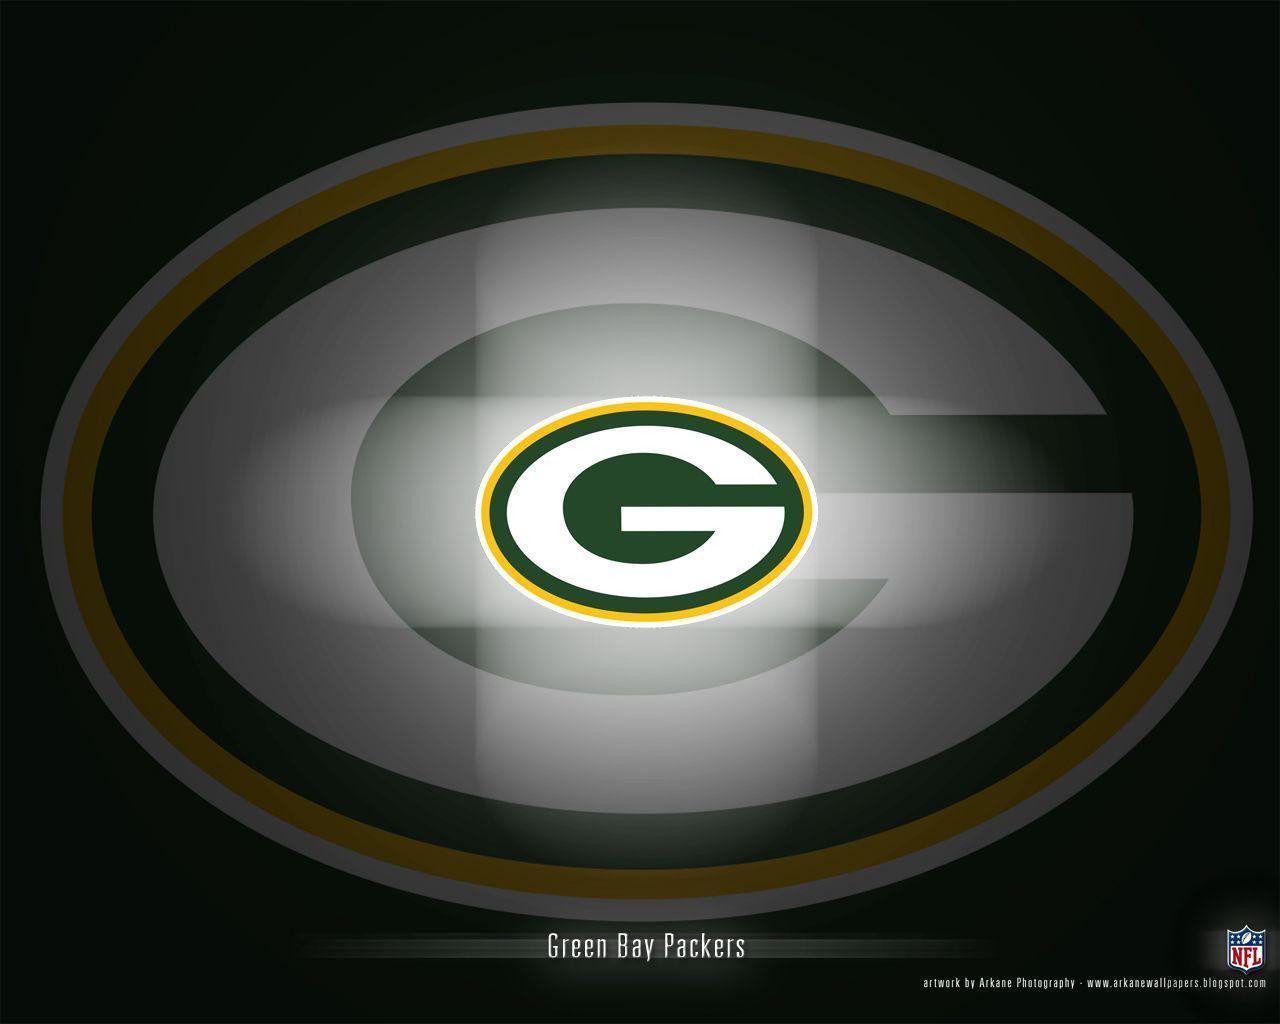 Green Bay Packers wallpaper 76268